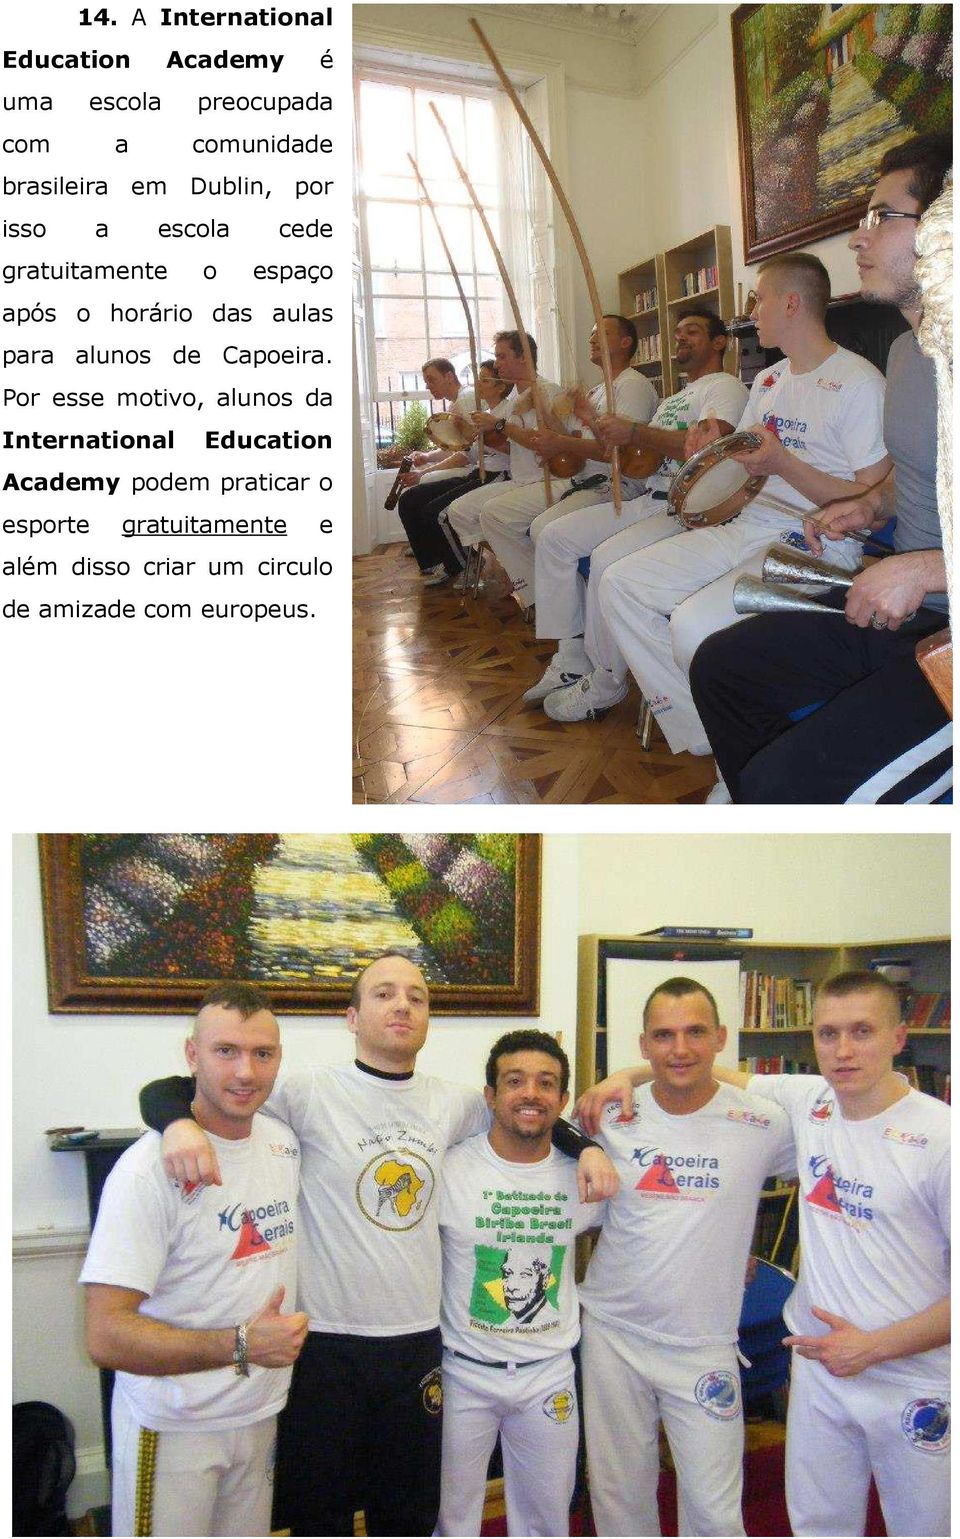 aulas para alunos de Capoeira.